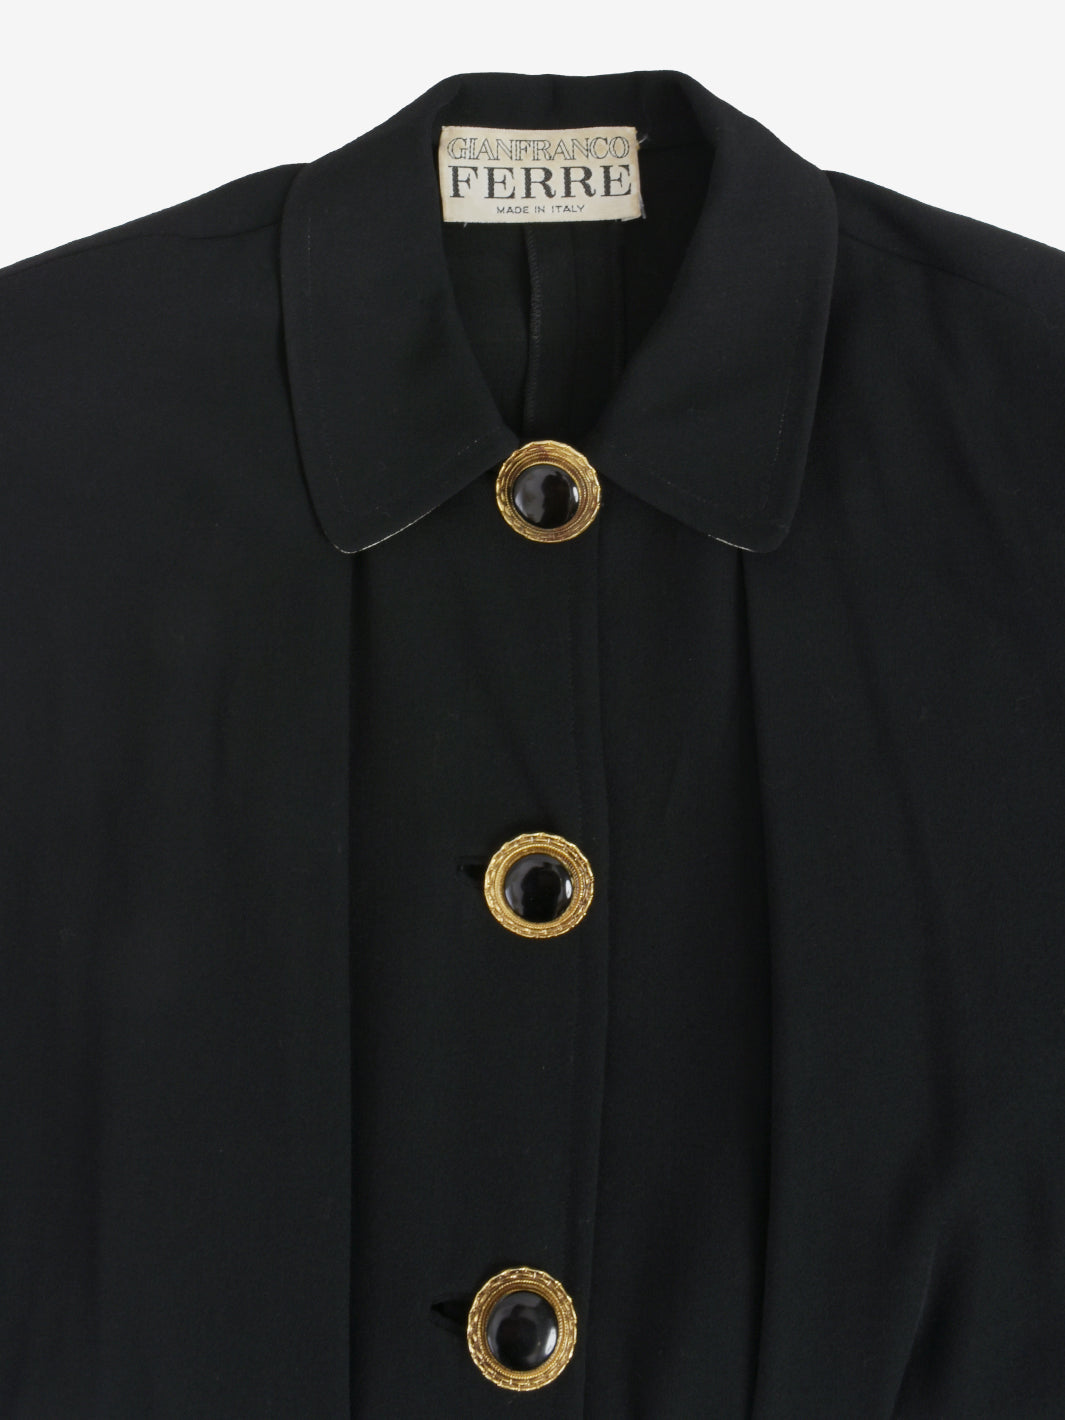 Gianfranco Ferré Black Suit With Jewels Buttons - 80s